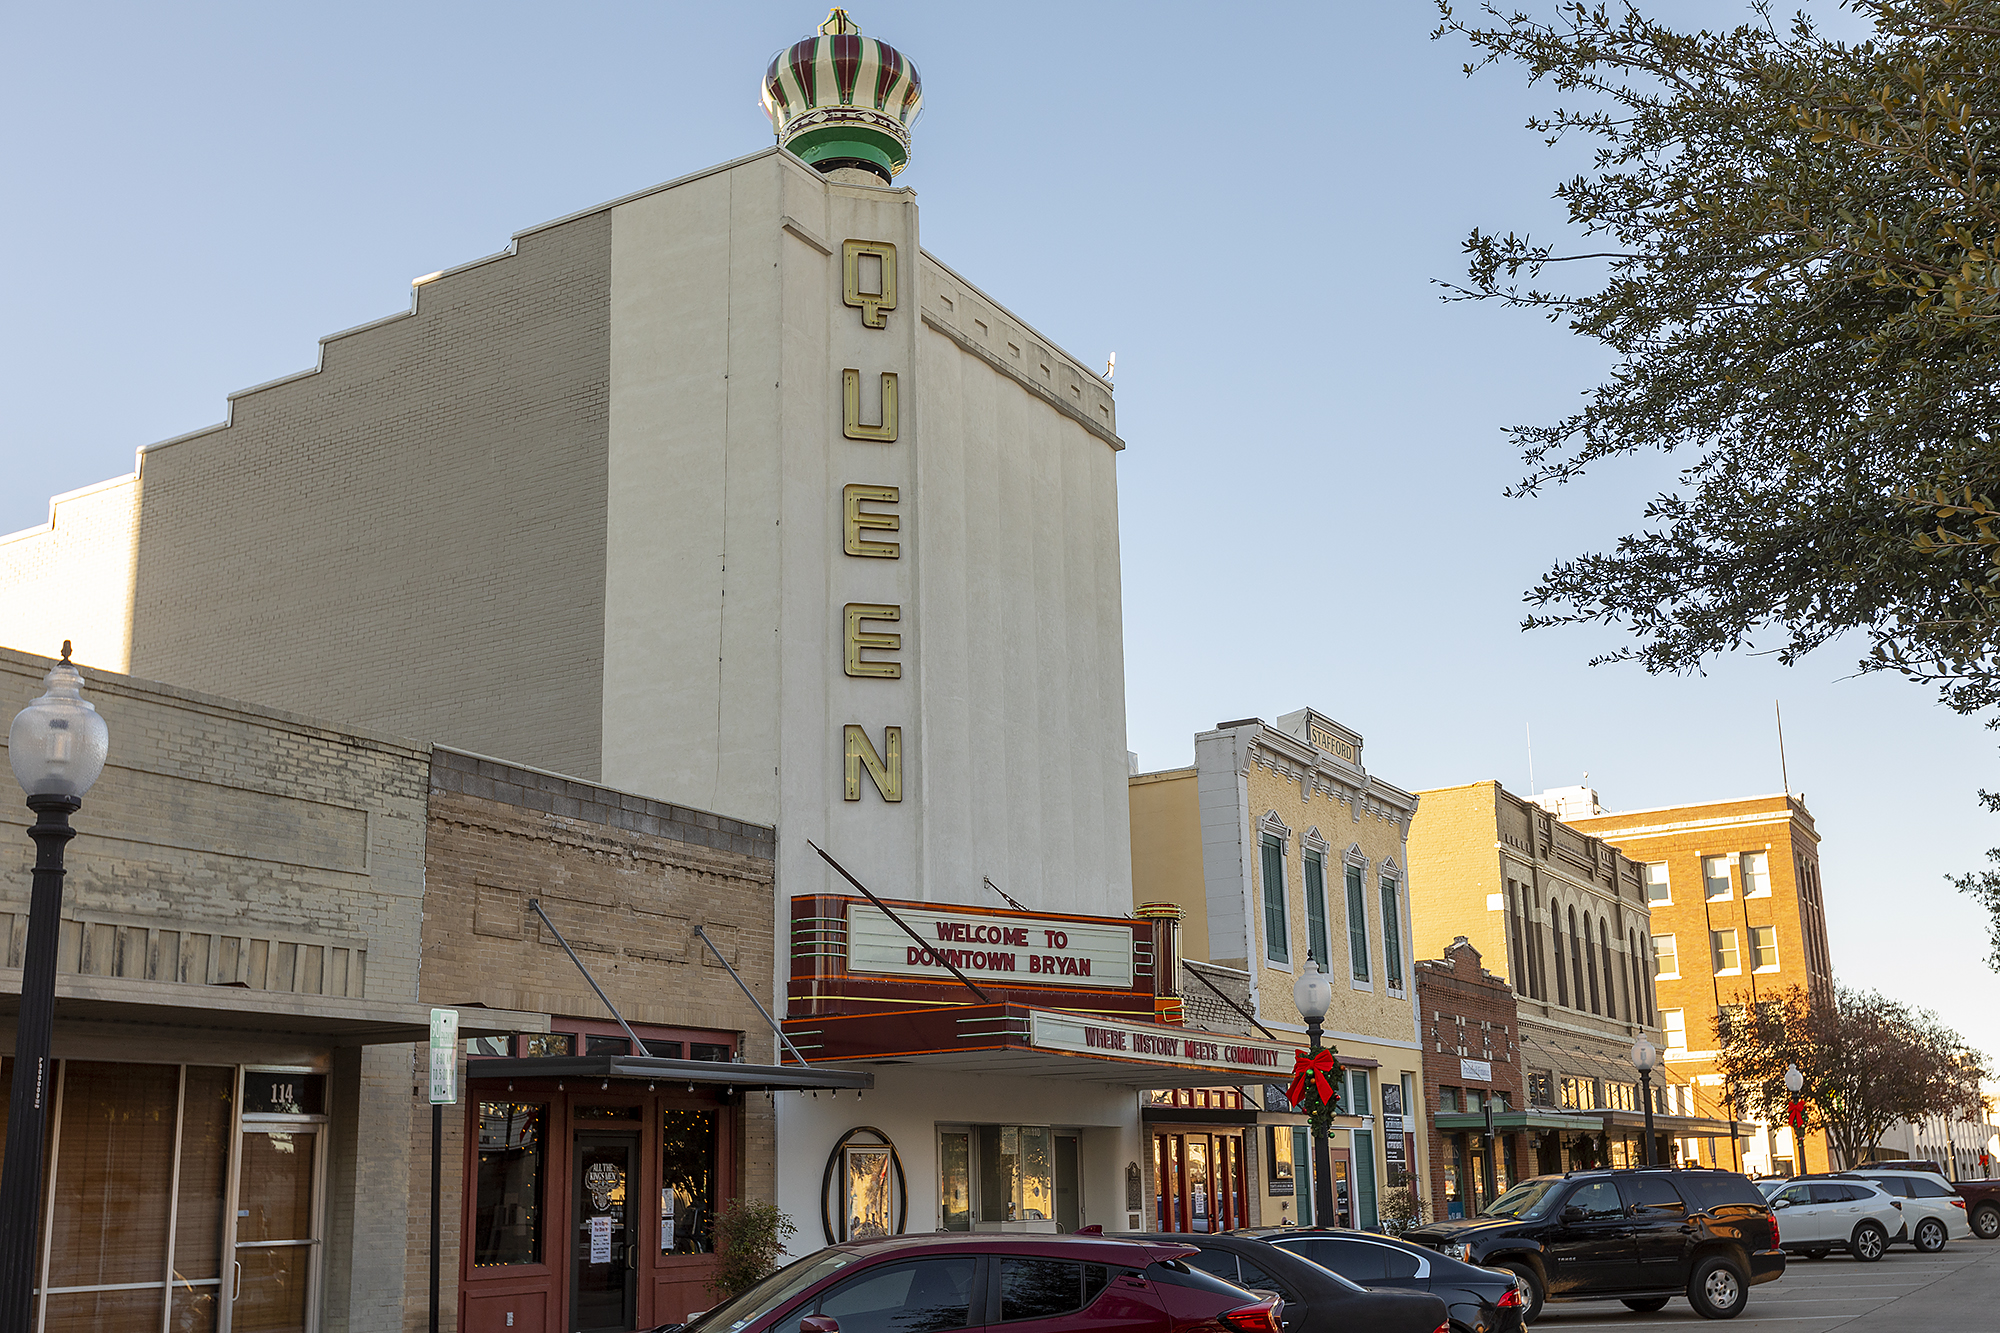 Queen Theatre in Downtown Bryan TX